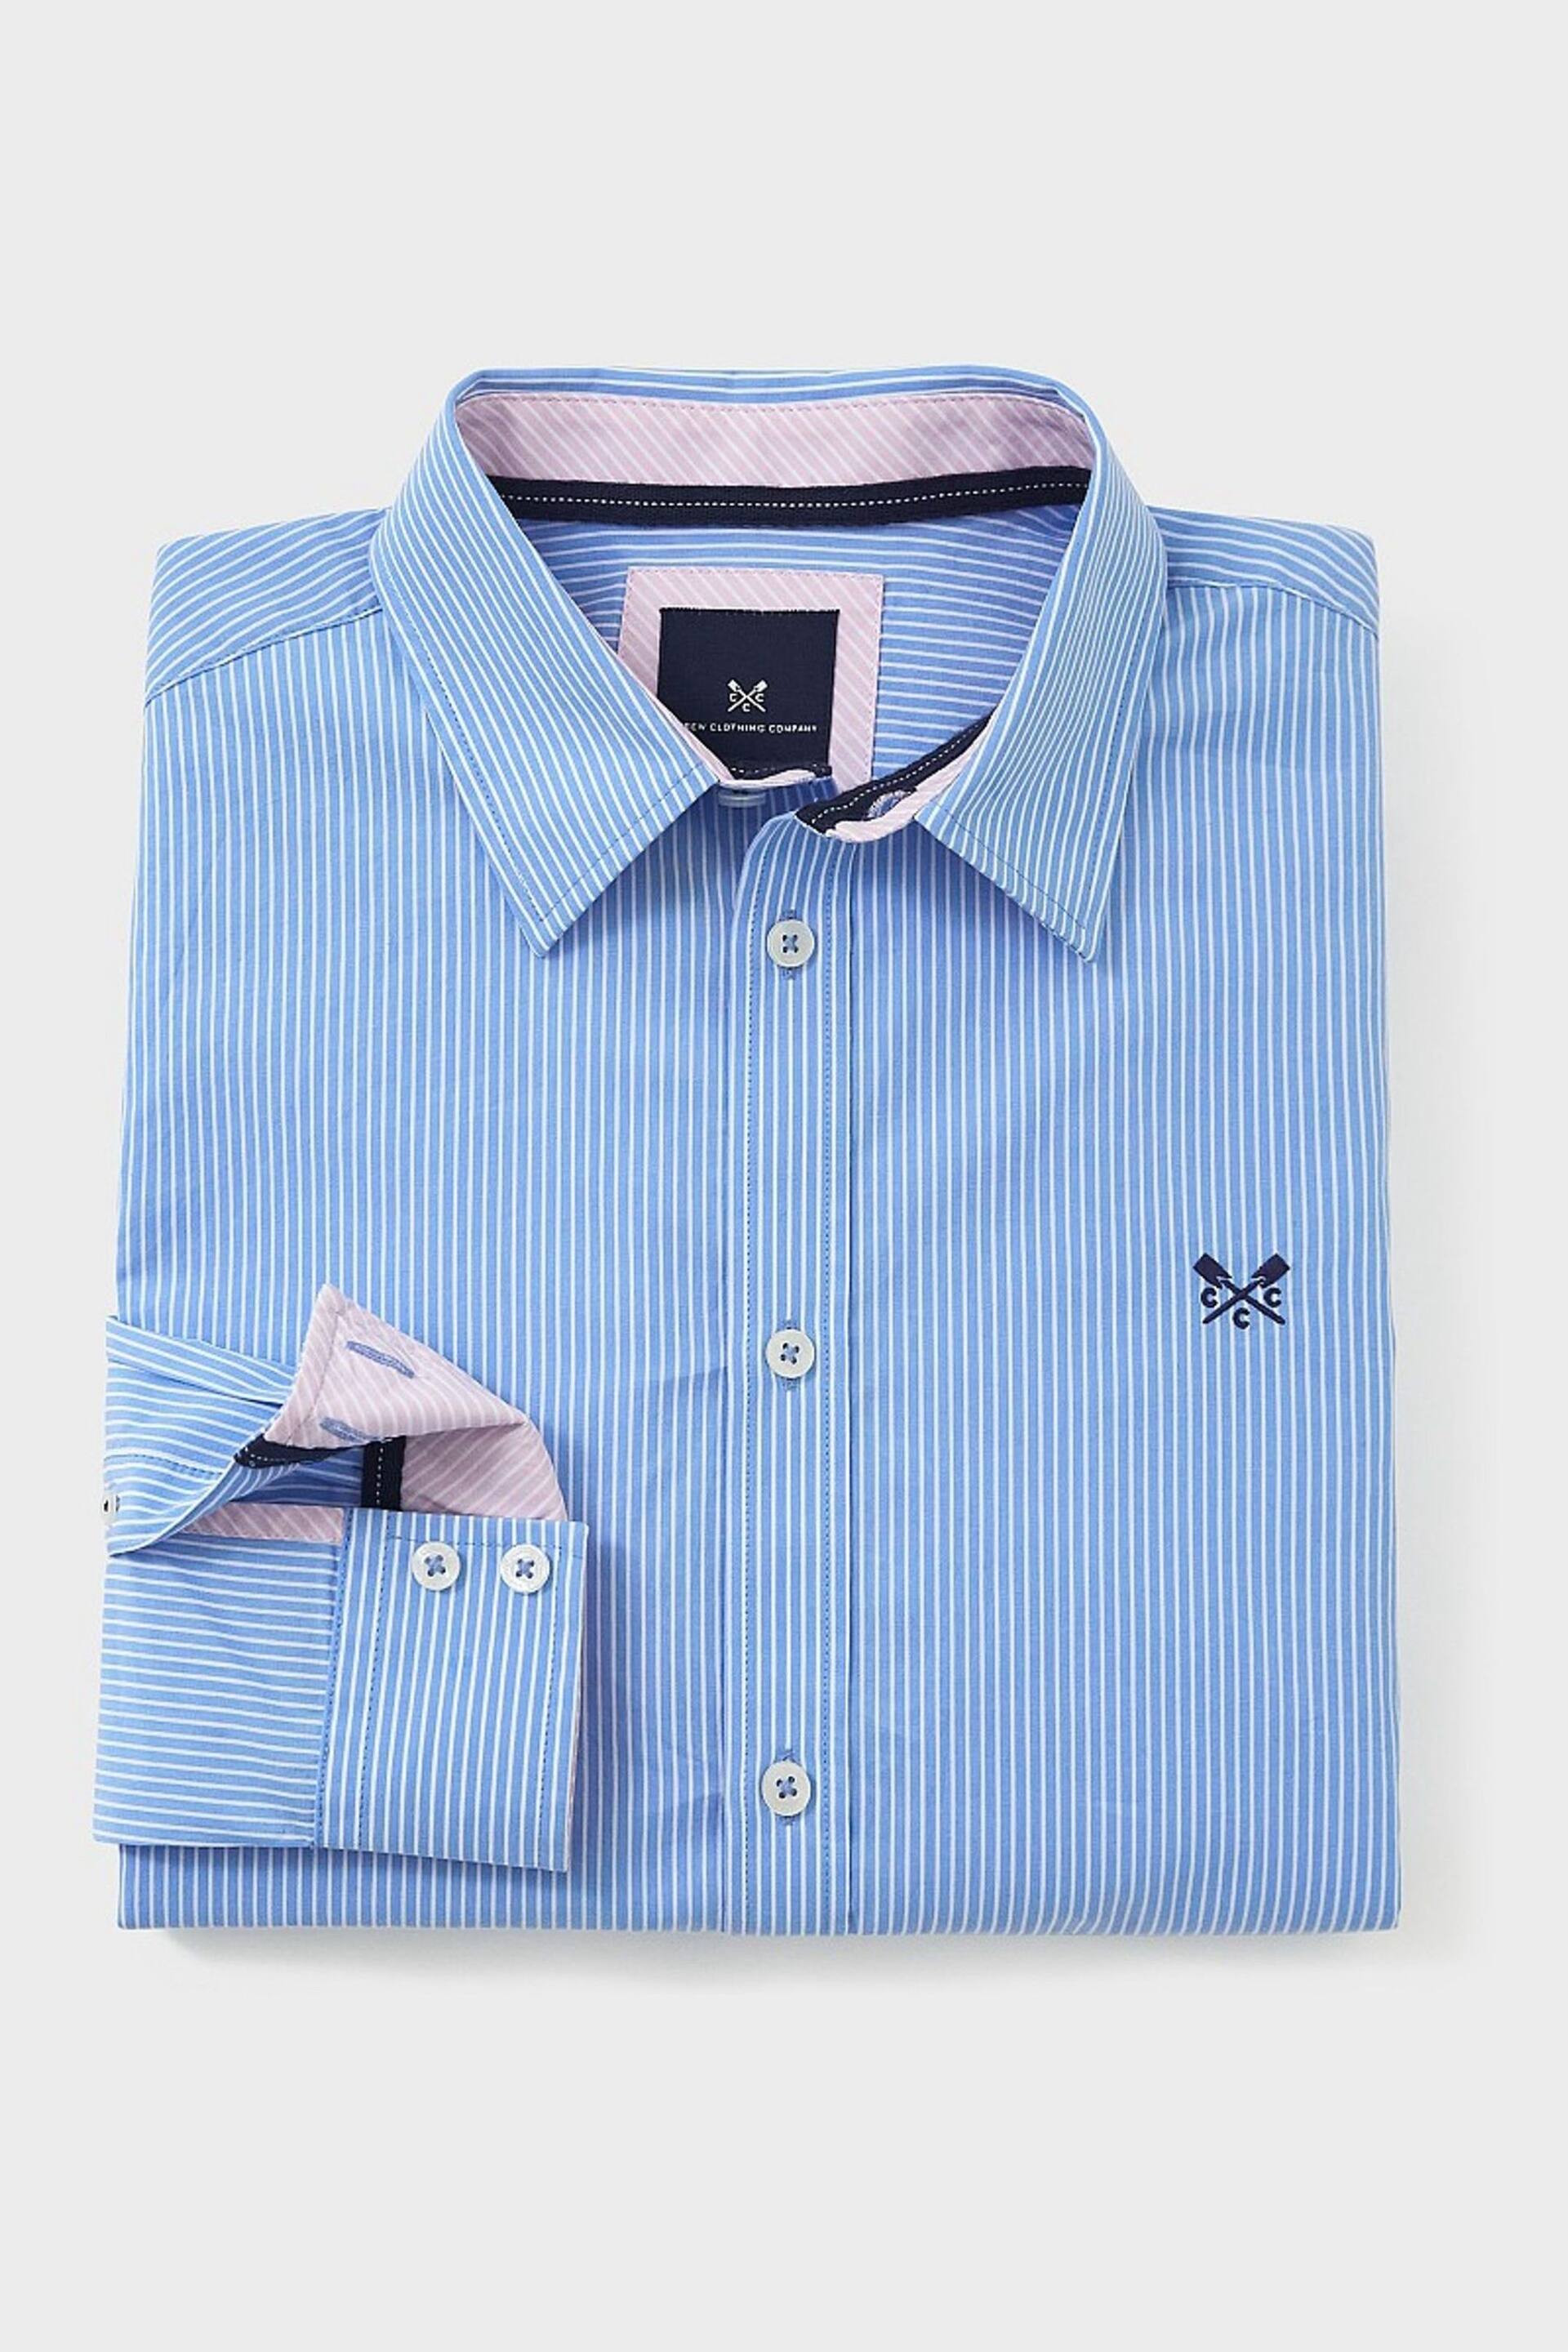 Crew Clothing Heritage Micro Stripe Shirt - Image 4 of 4